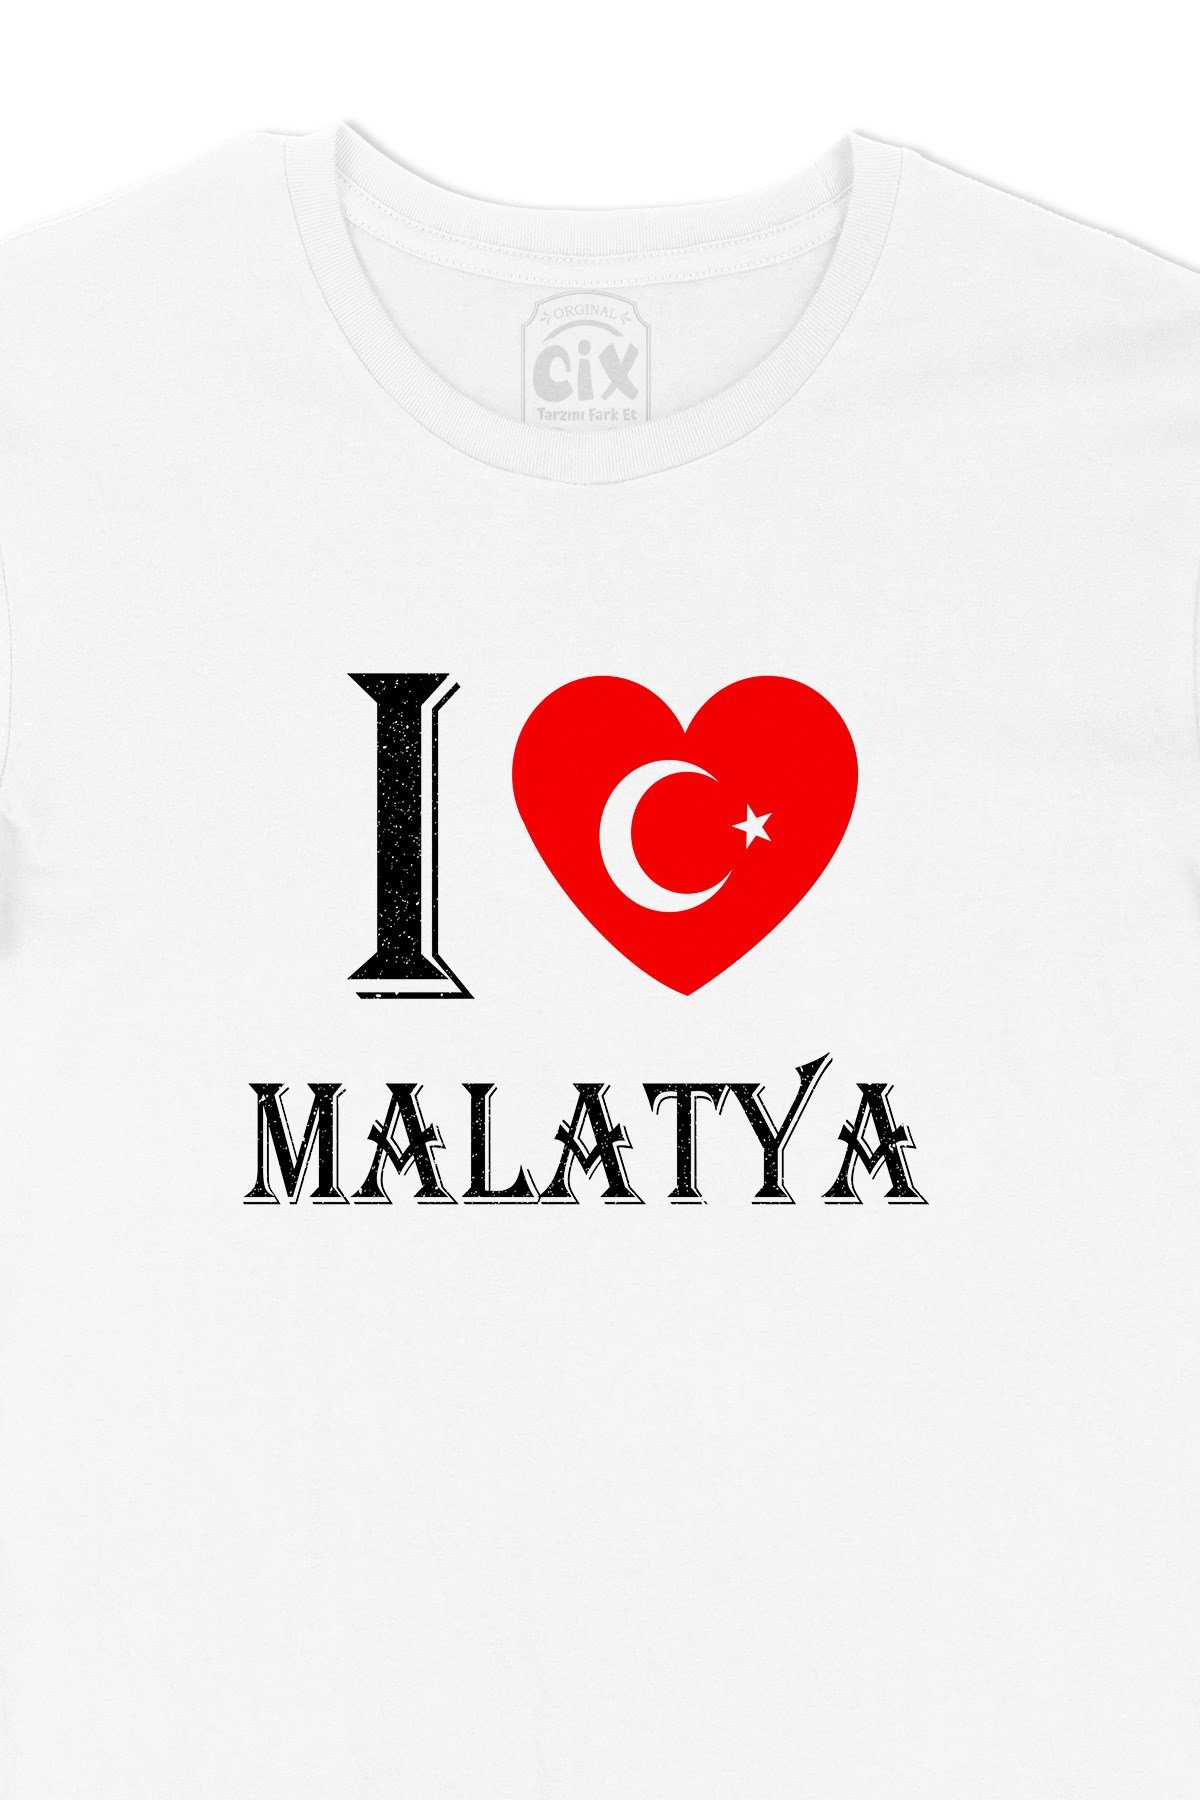 Cix I Love Malatya Tişört - Ücretsiz Kargo